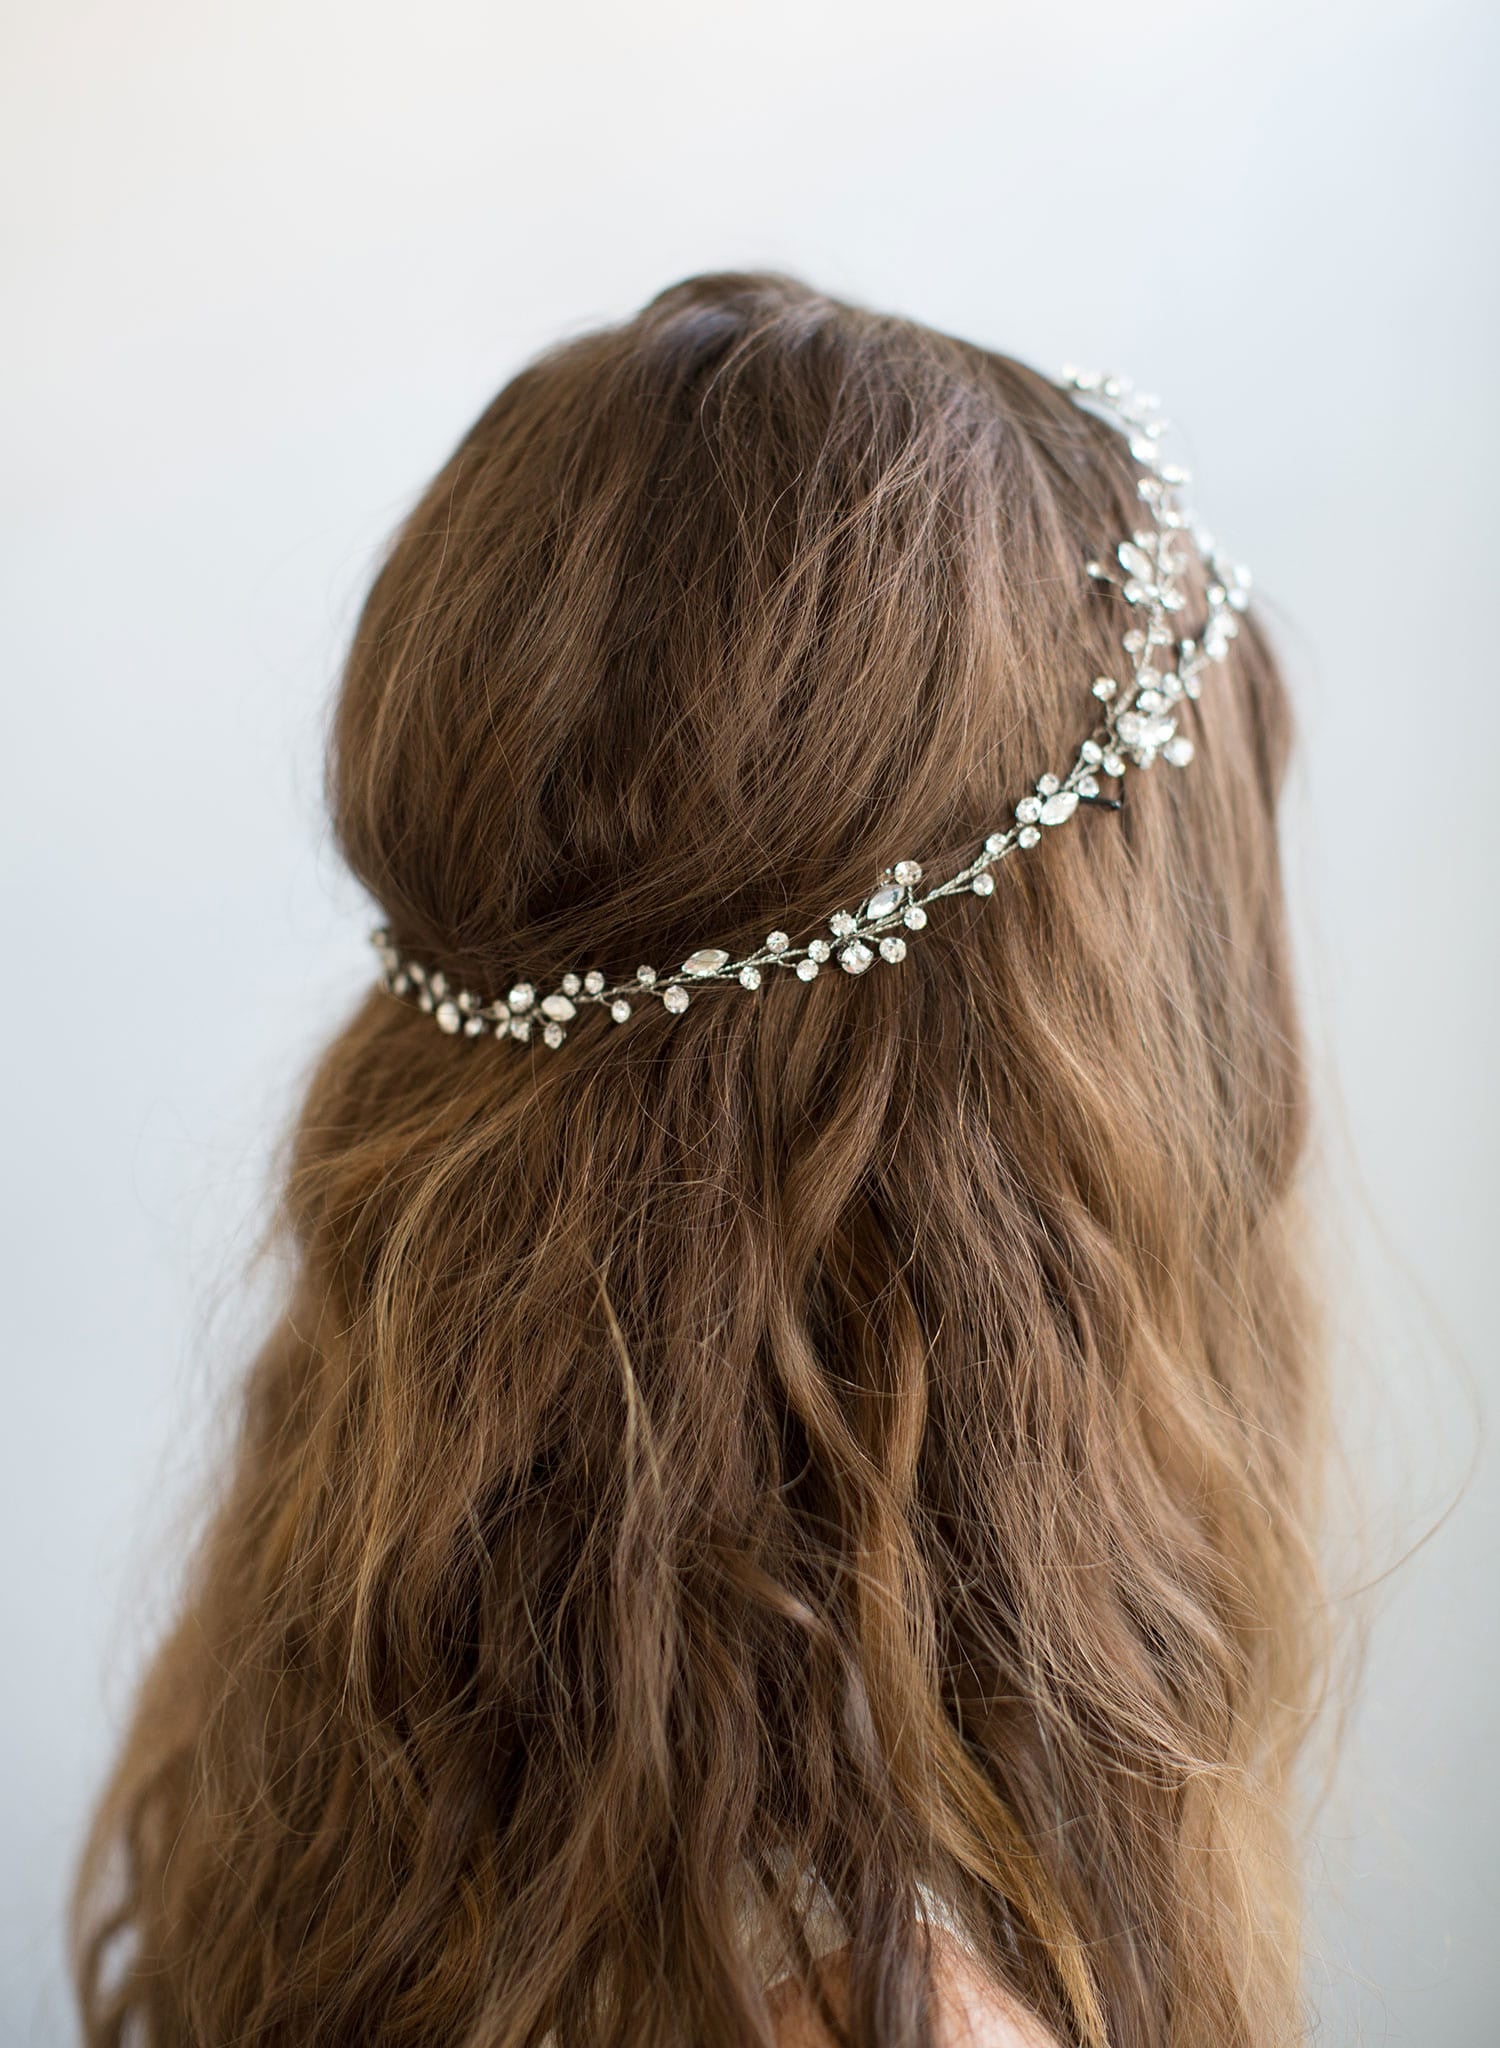 Extra long simple crystal hair vine - Style #735